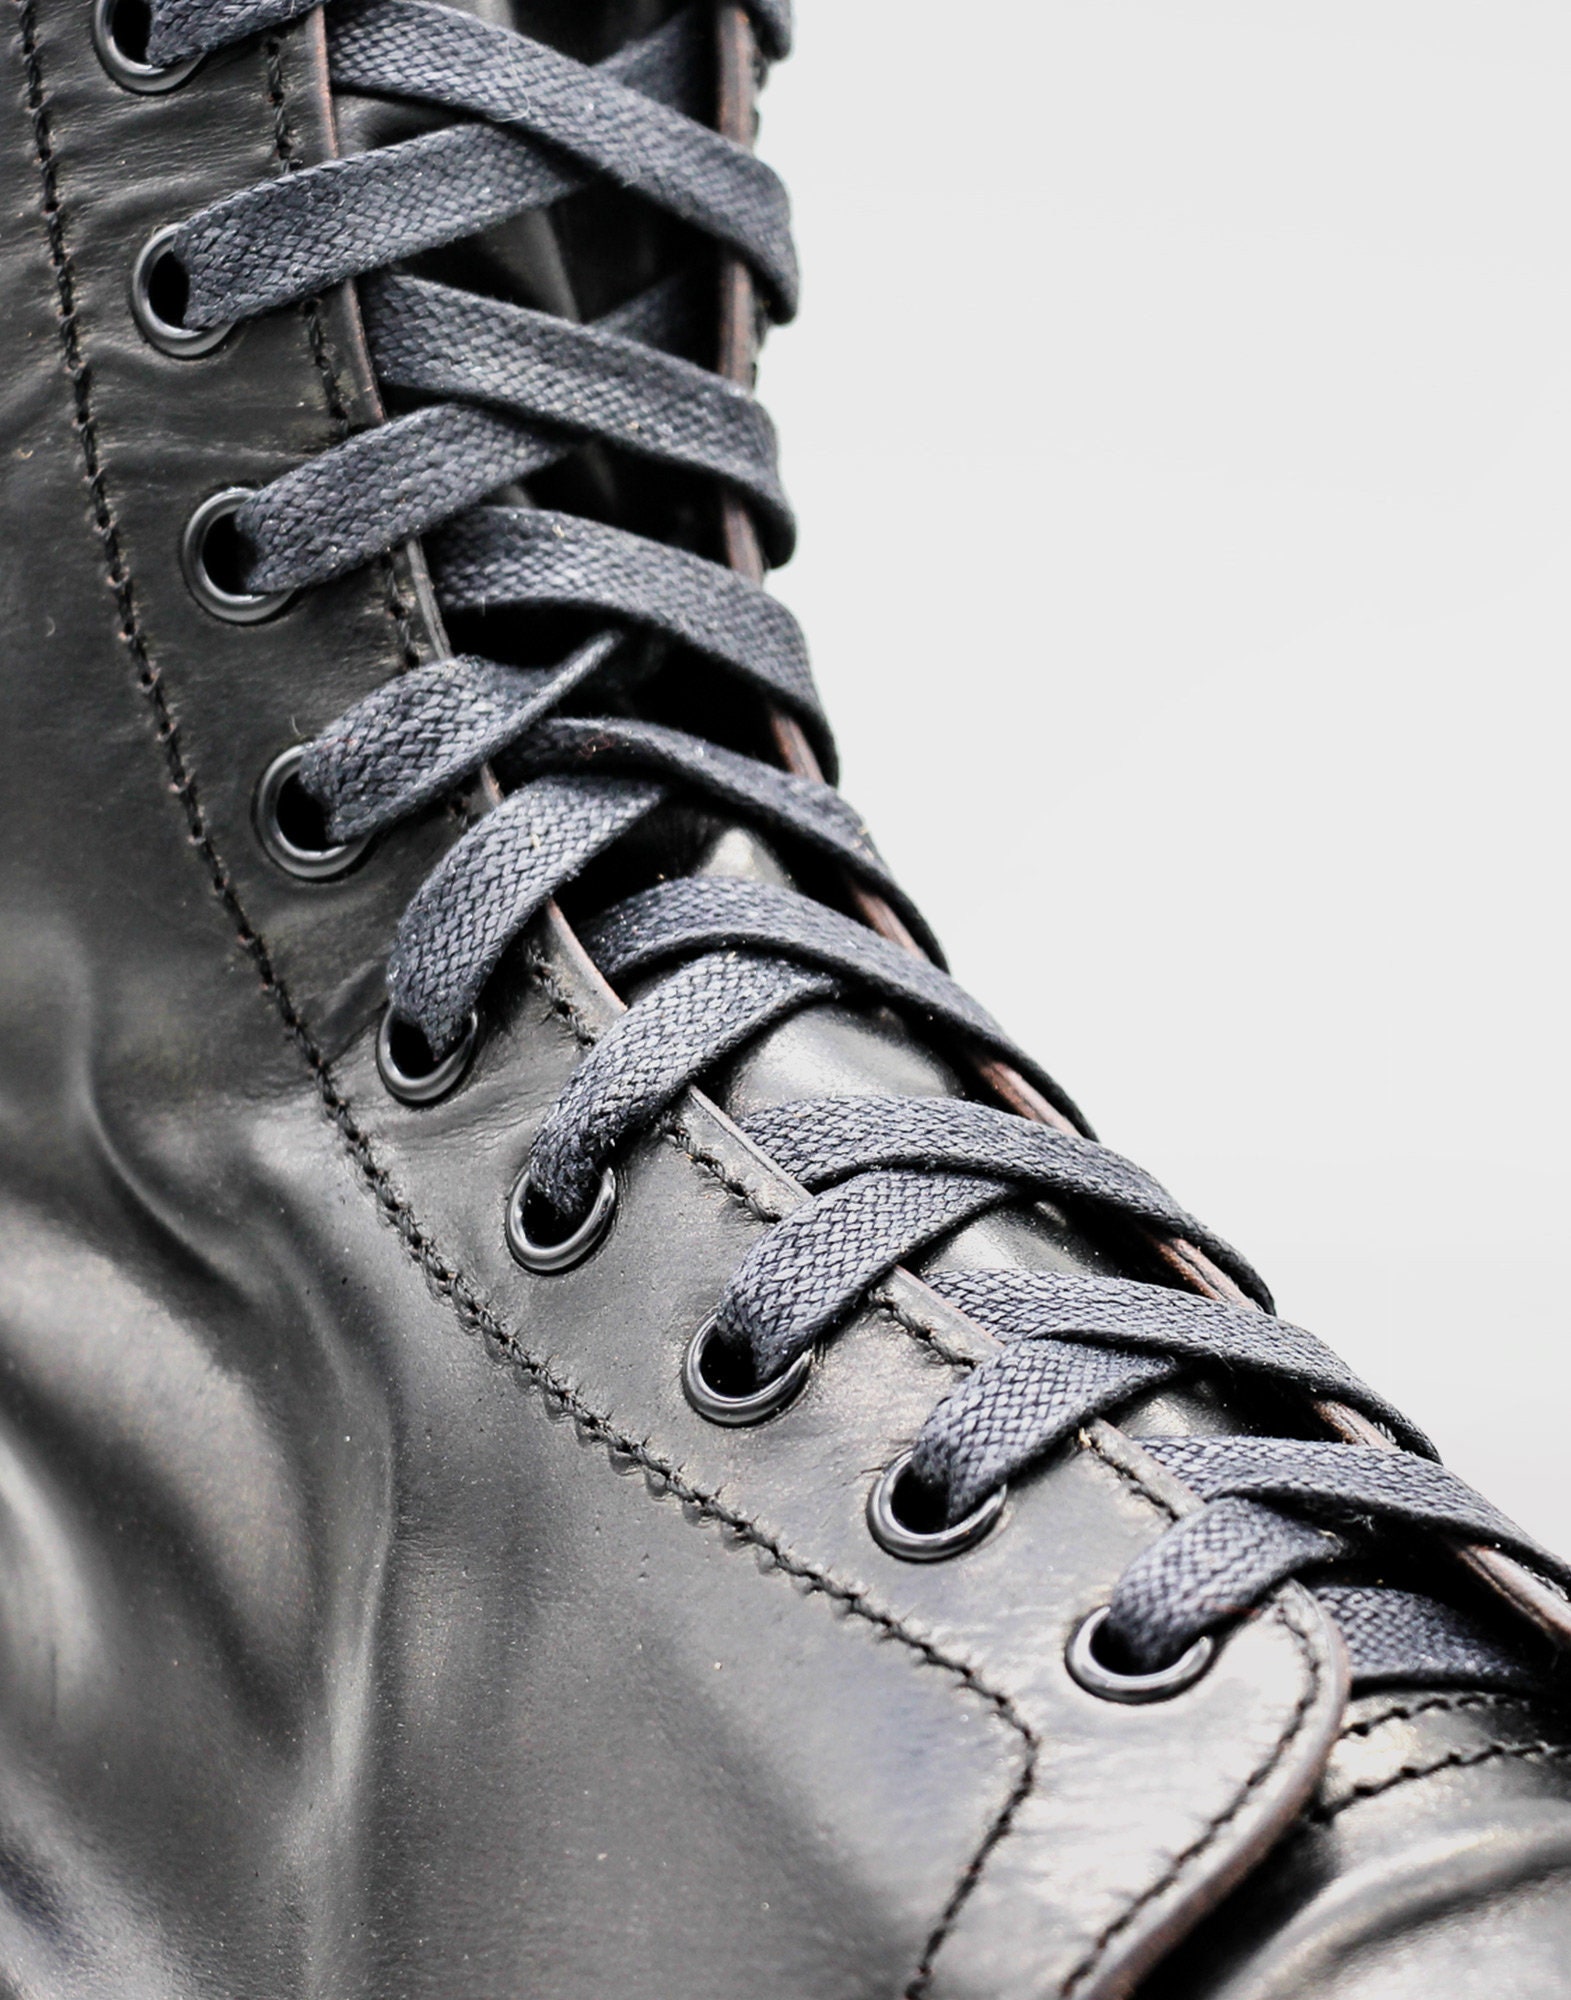 Kombat boots | Barefoot boots | Black Veg tan leather | Handmade shoes ...